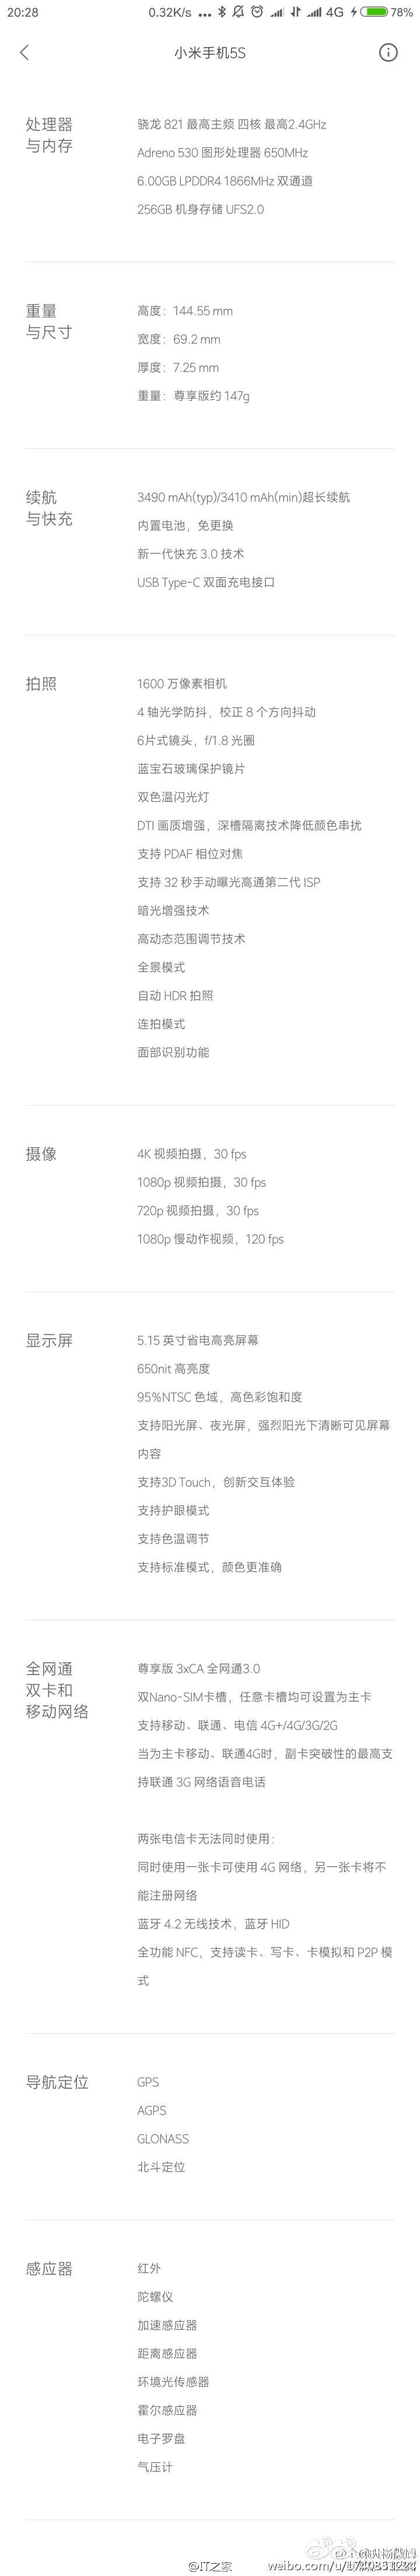 Xiaomi-Mi-5s-spec-sheet.jpg